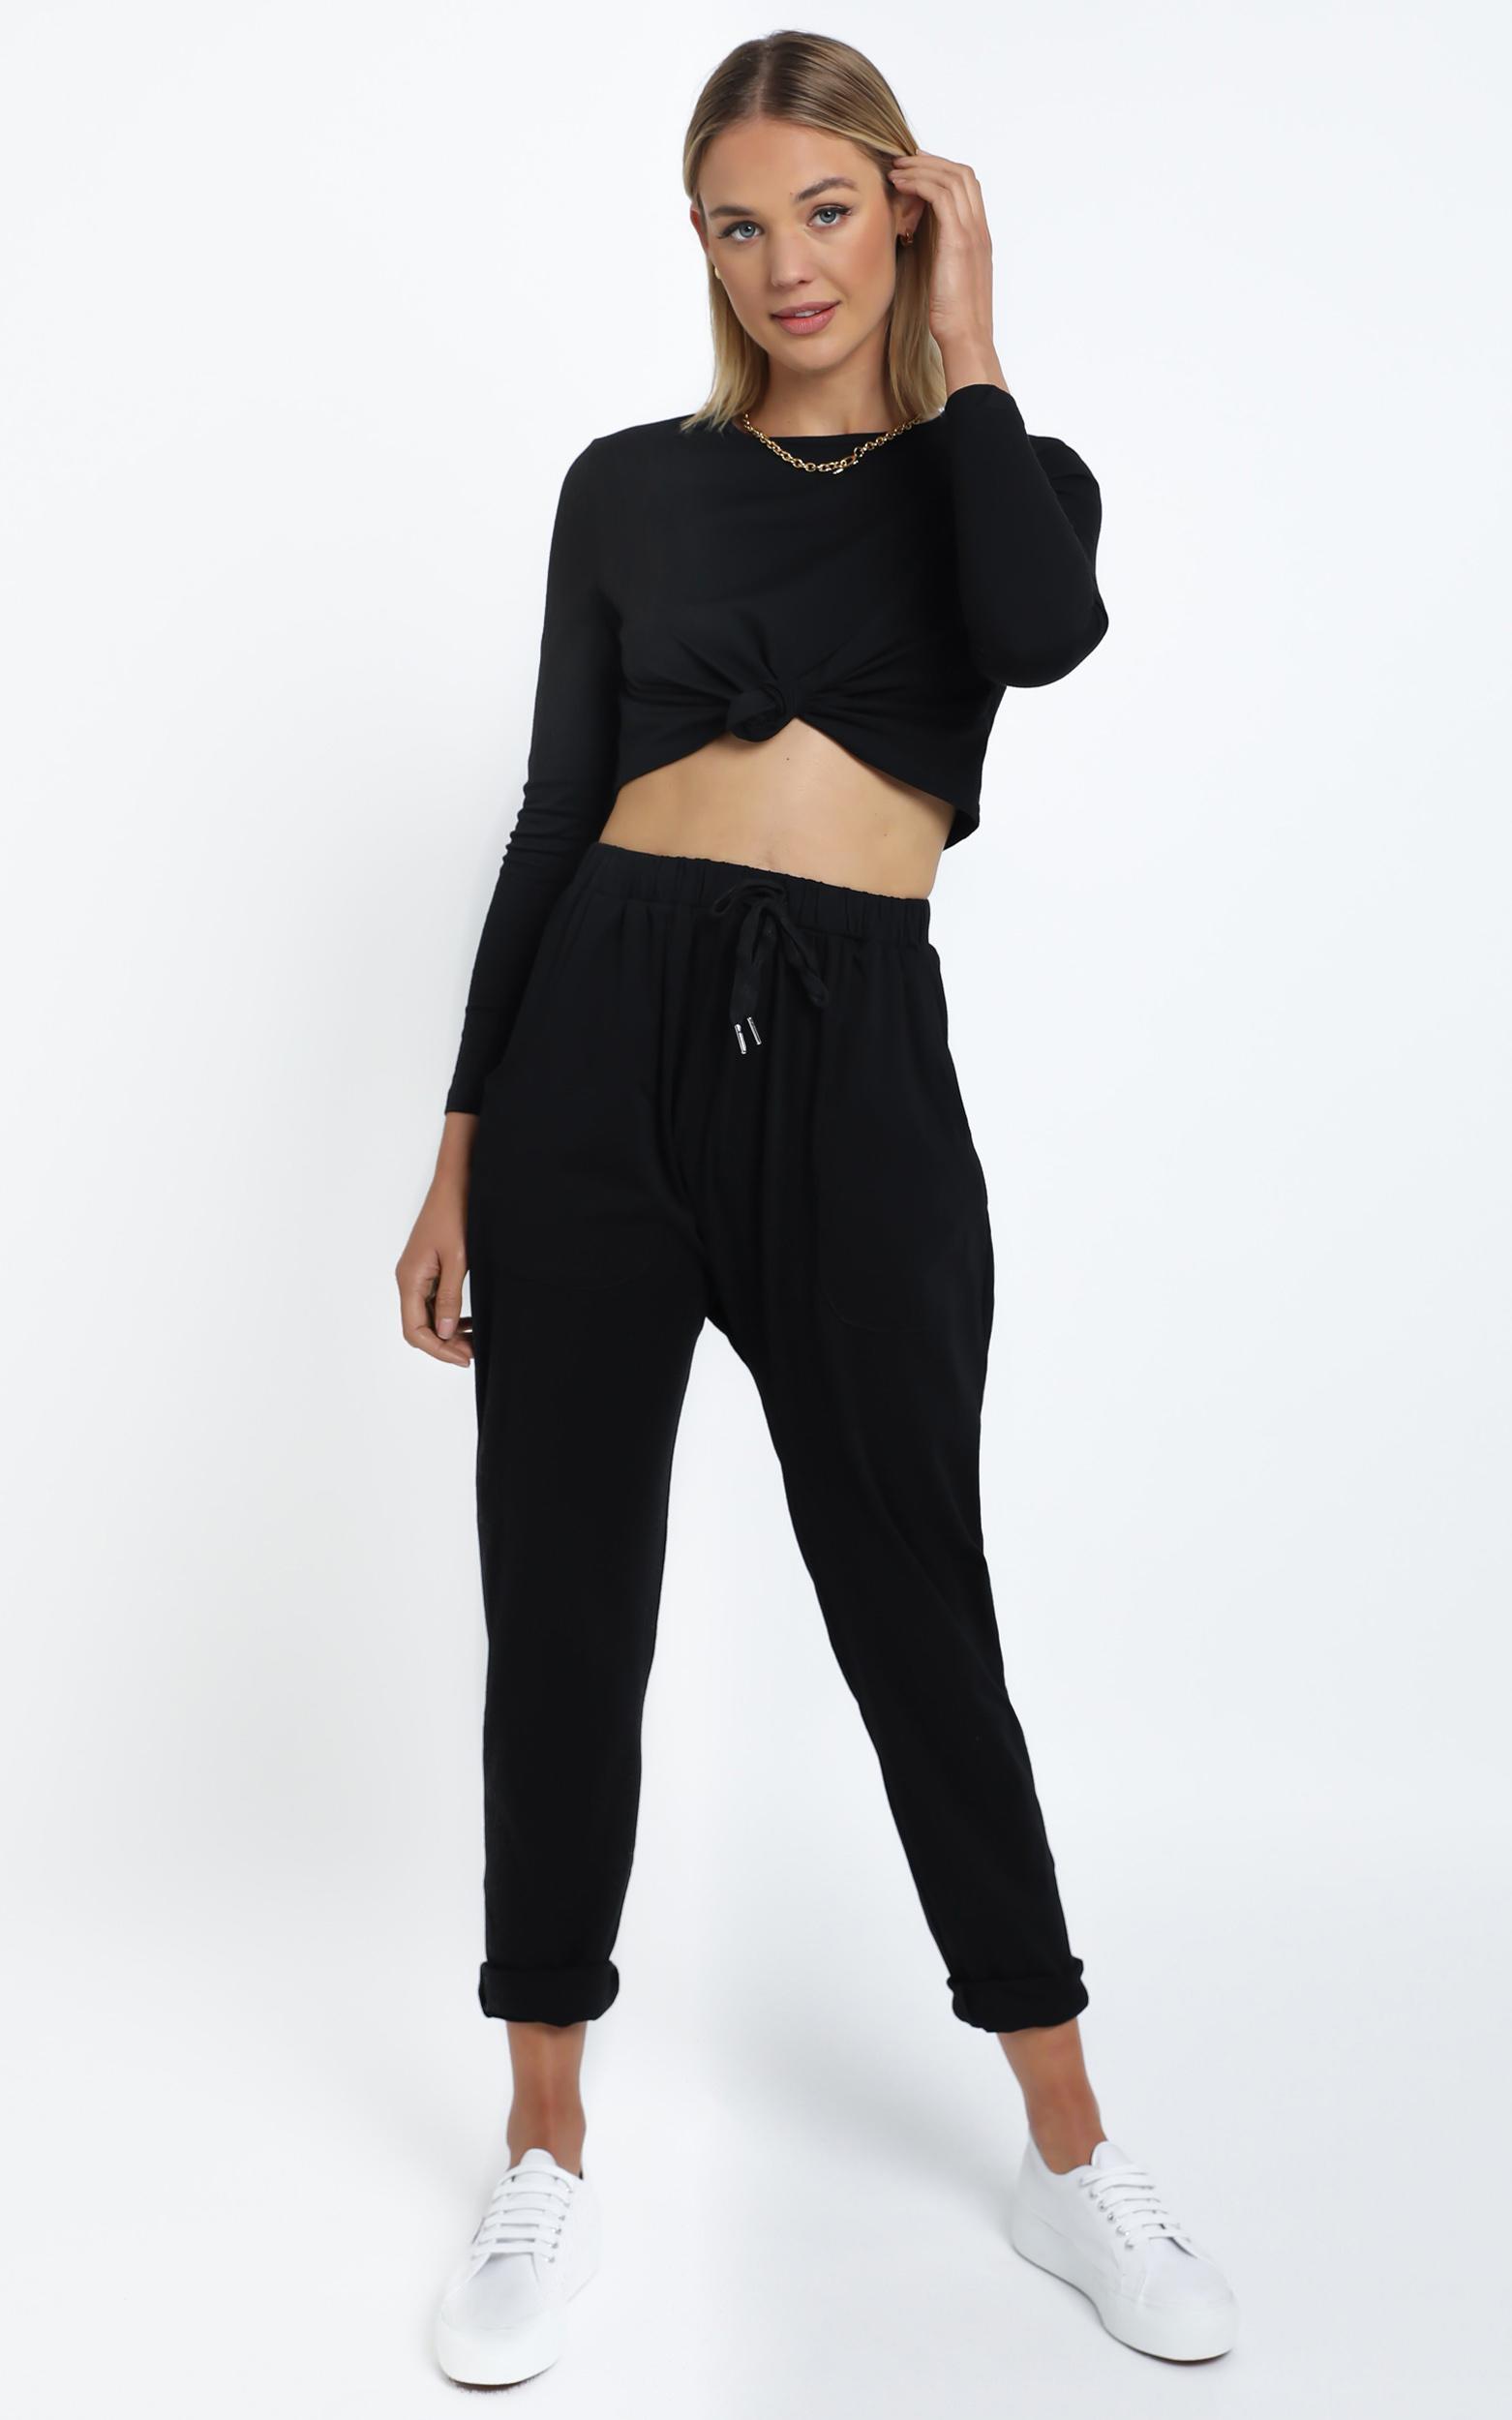 Zanna Pants in Black - 14 (XL), Black, hi-res image number null